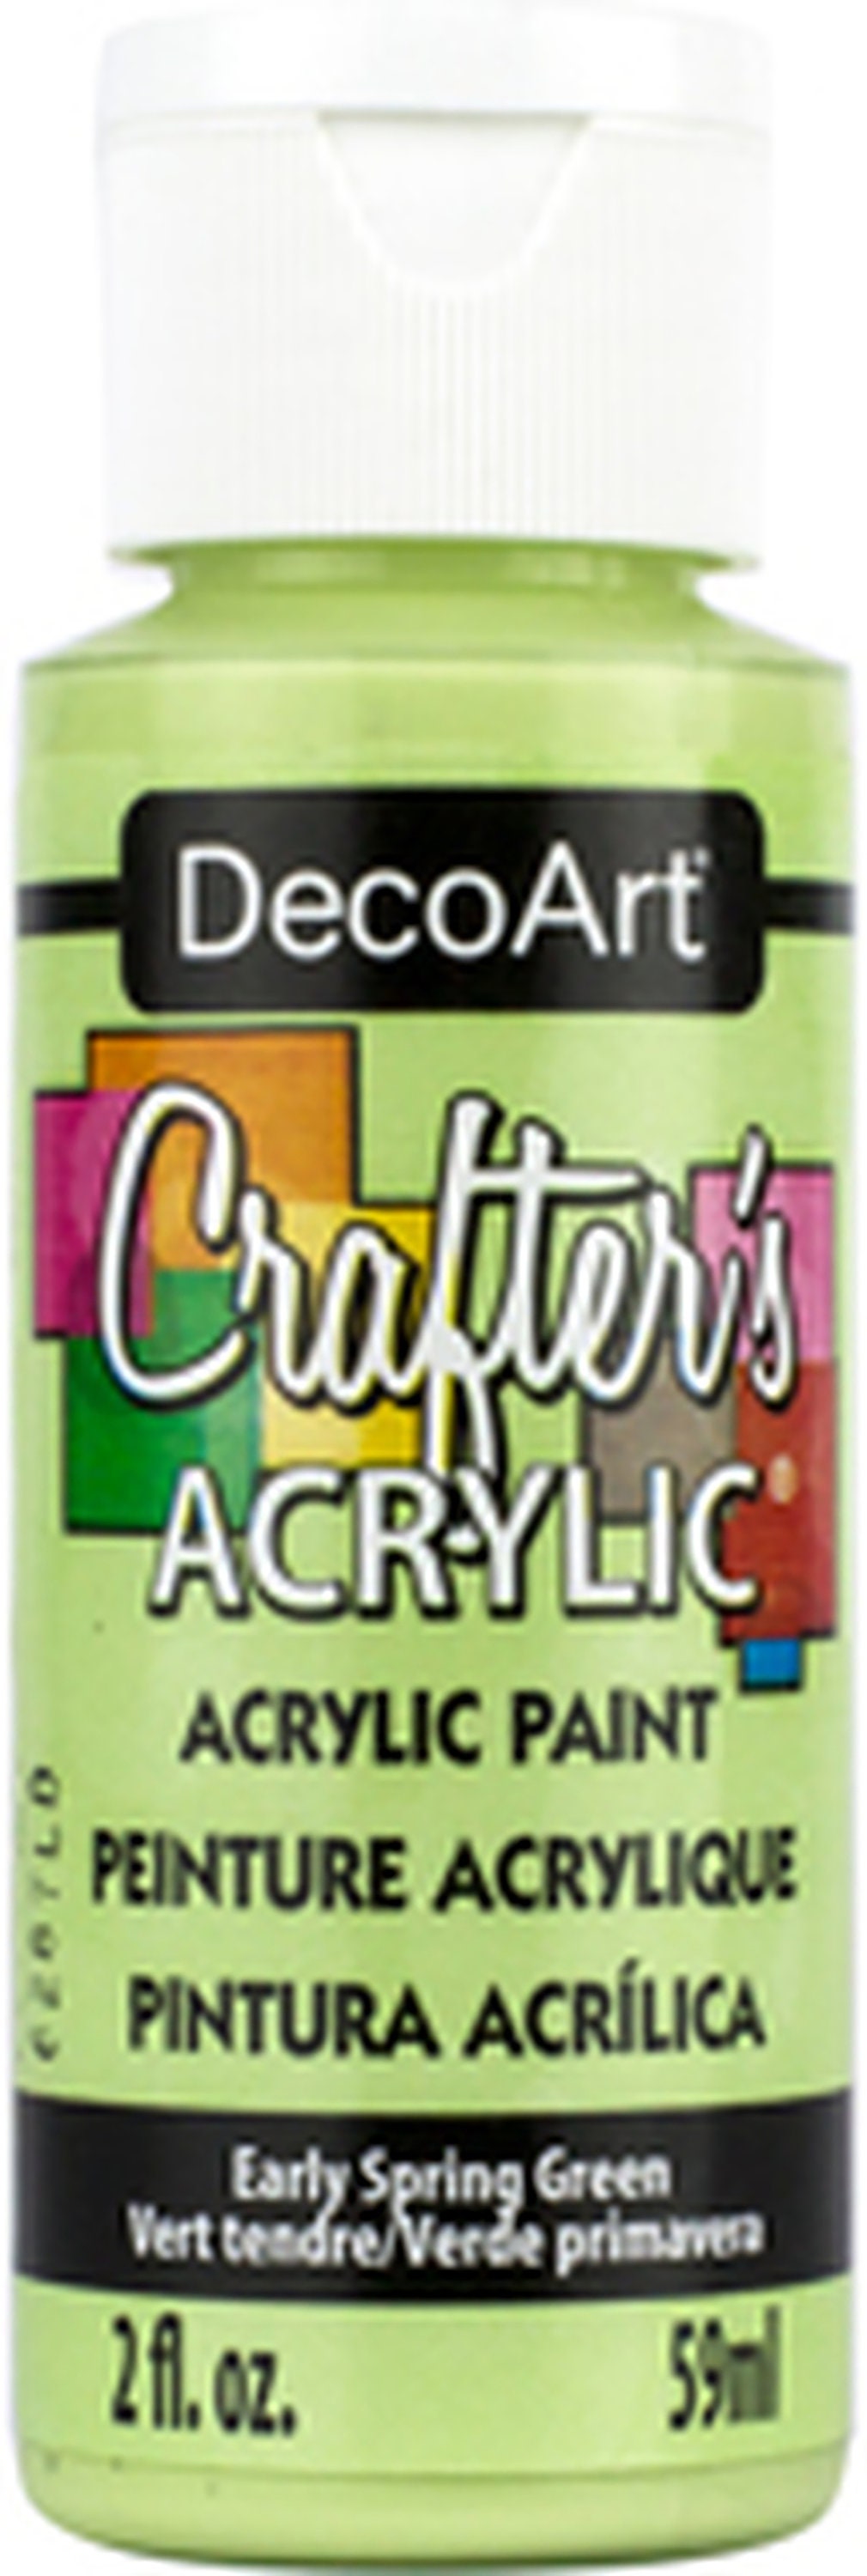 Decoart Crafters Acrylic Paints Yellow Tones 59ml 2oz -  Norway